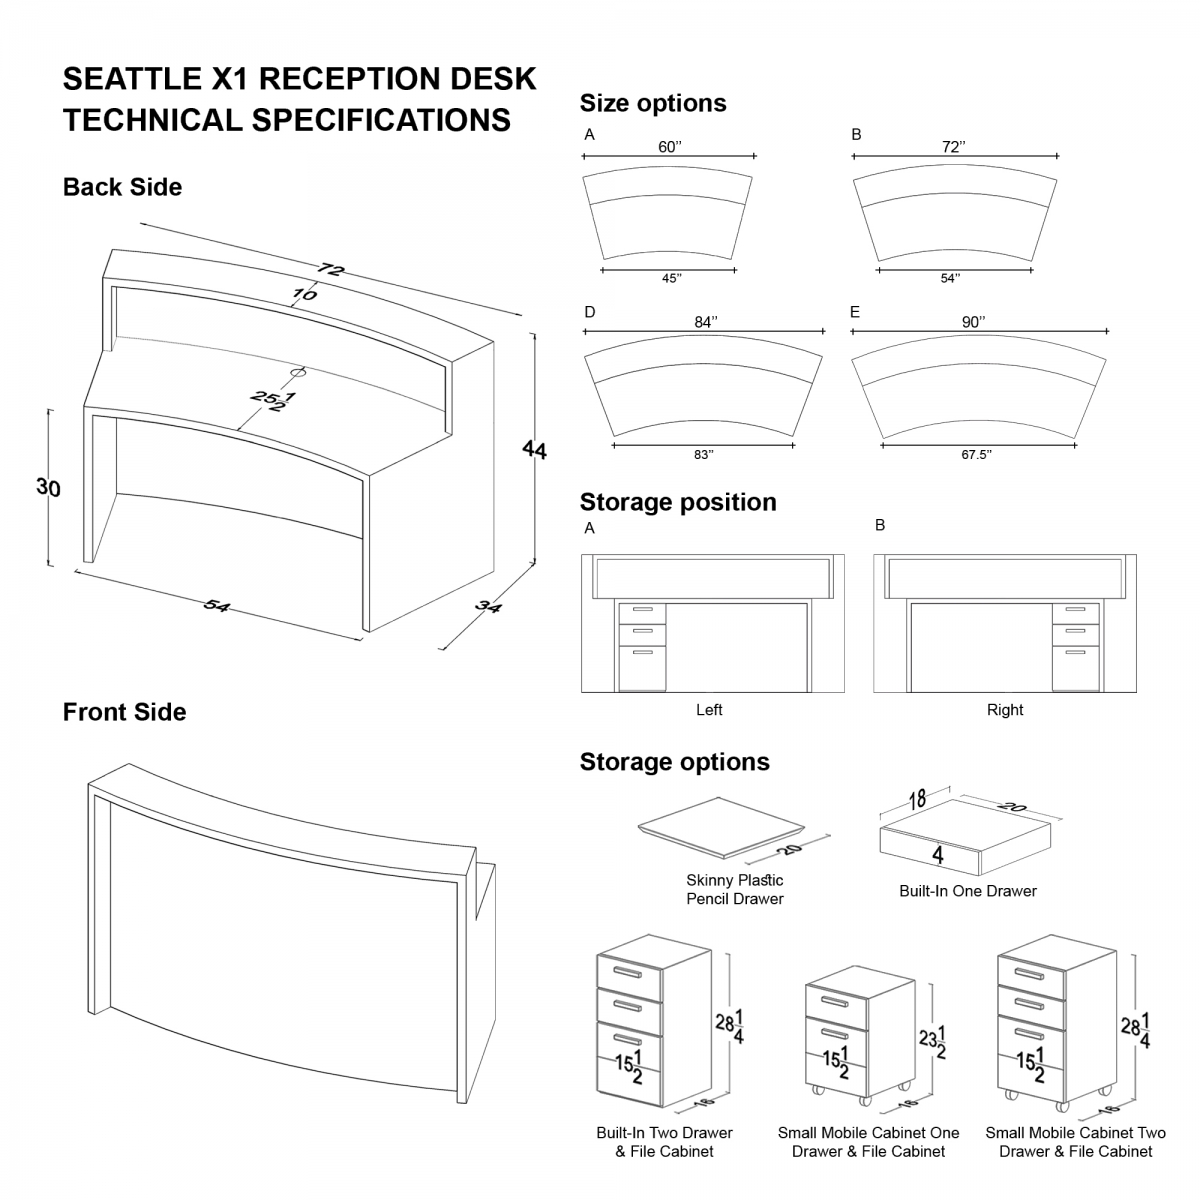 Seattle X1 Custom Reception Desk 